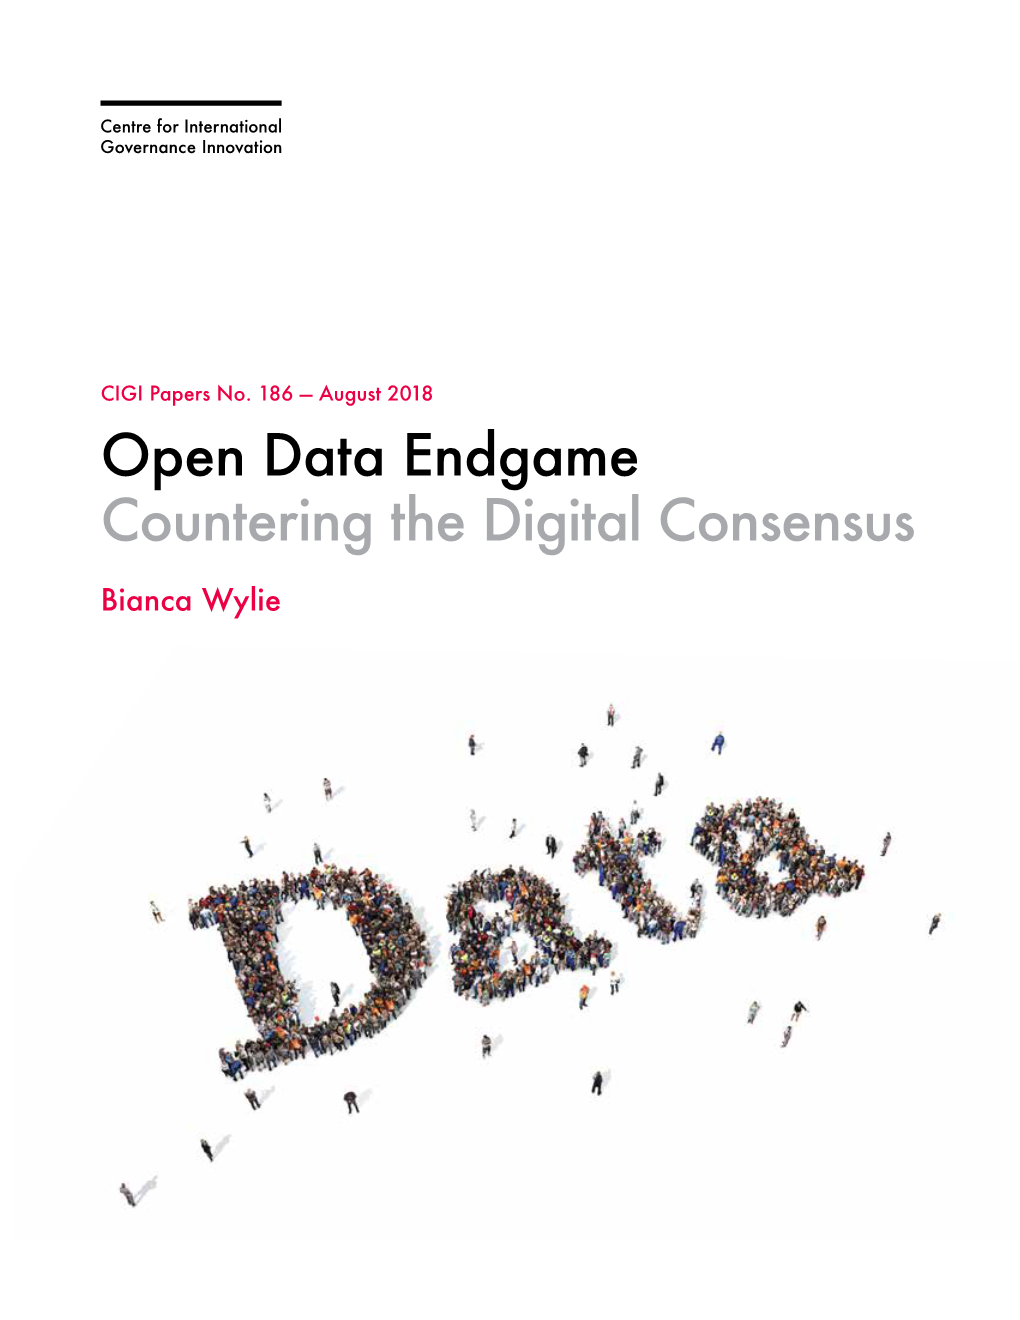 Open Data Endgame Countering the Digital Consensus